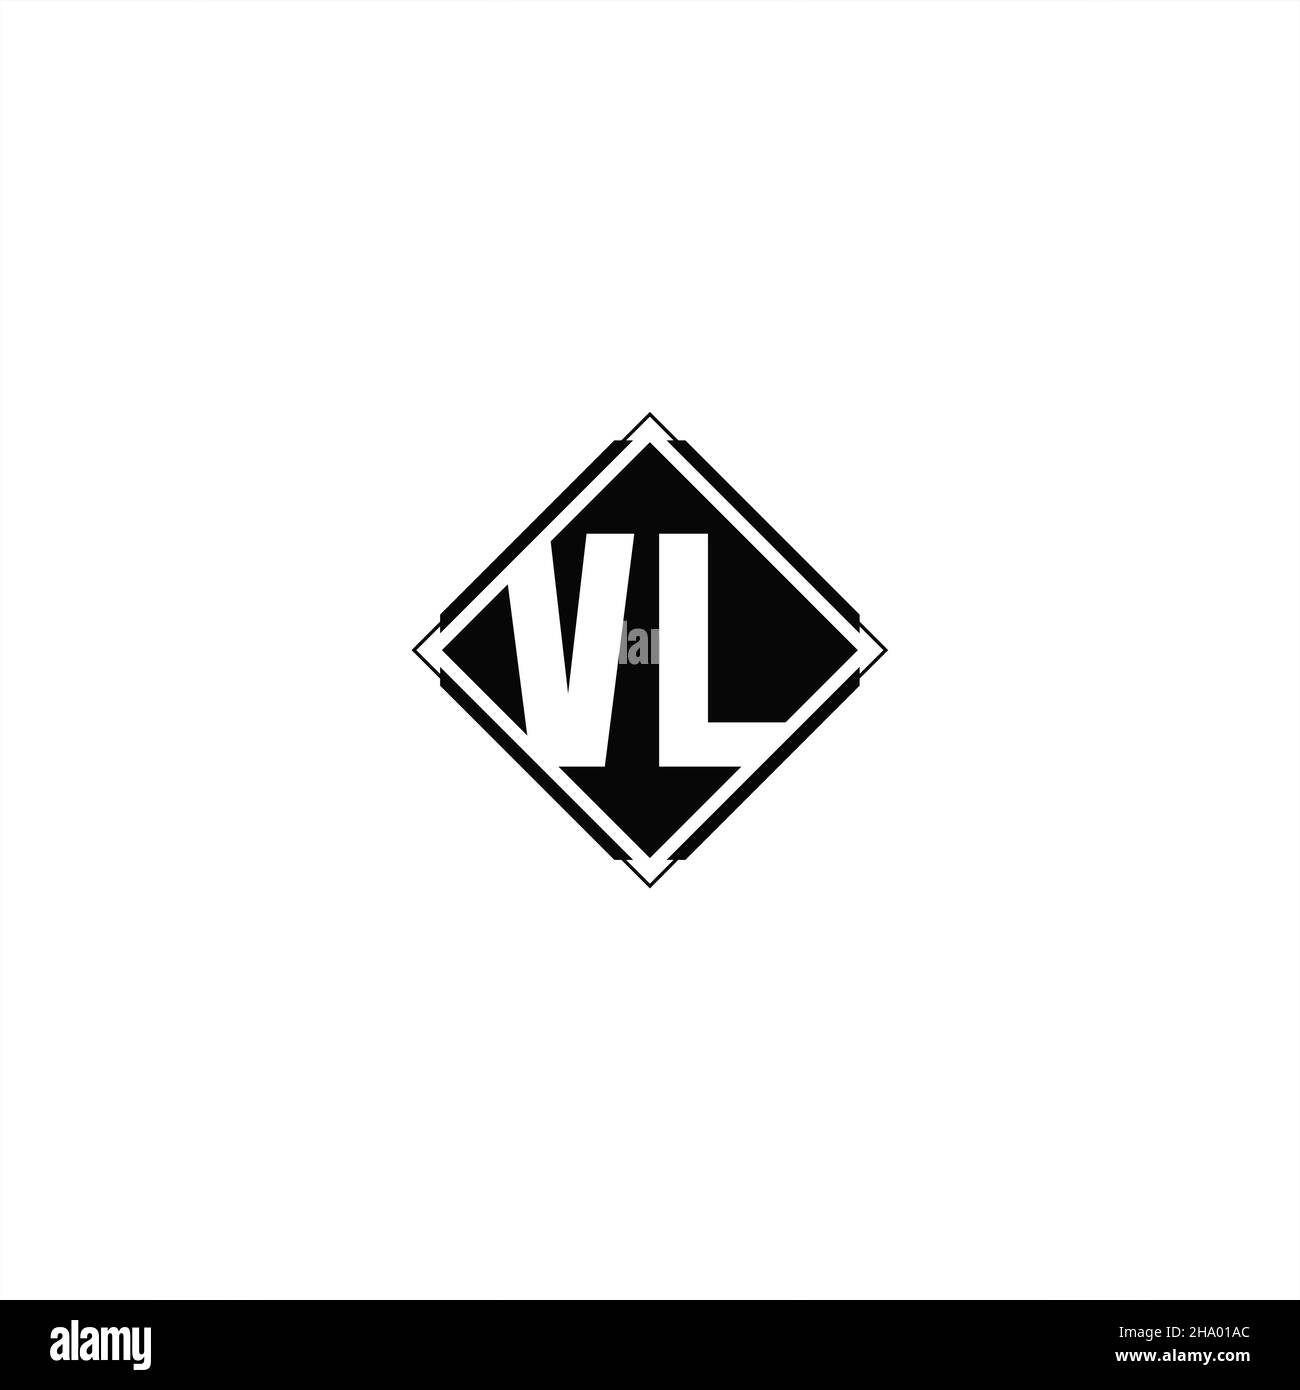 Vl logo monogram with diamond shape design Vector Image